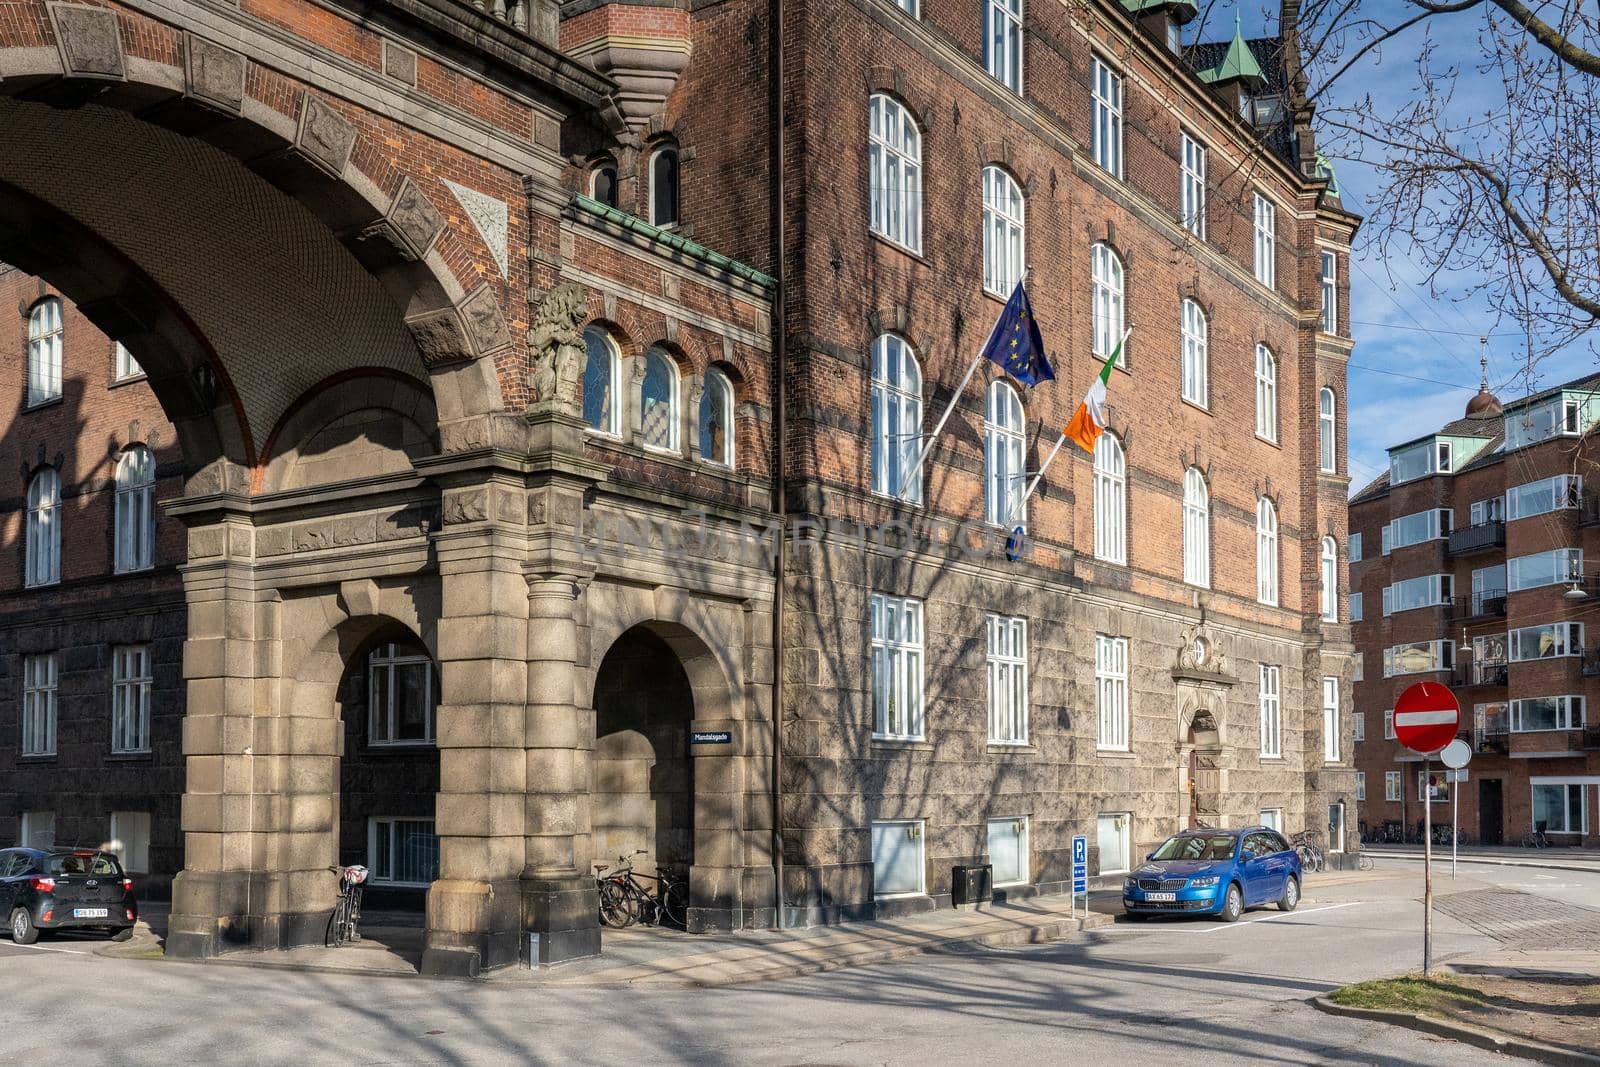 Copenhagen, Denmark. - March 1, 2022: Exterior view of the Embassy of Ireland.